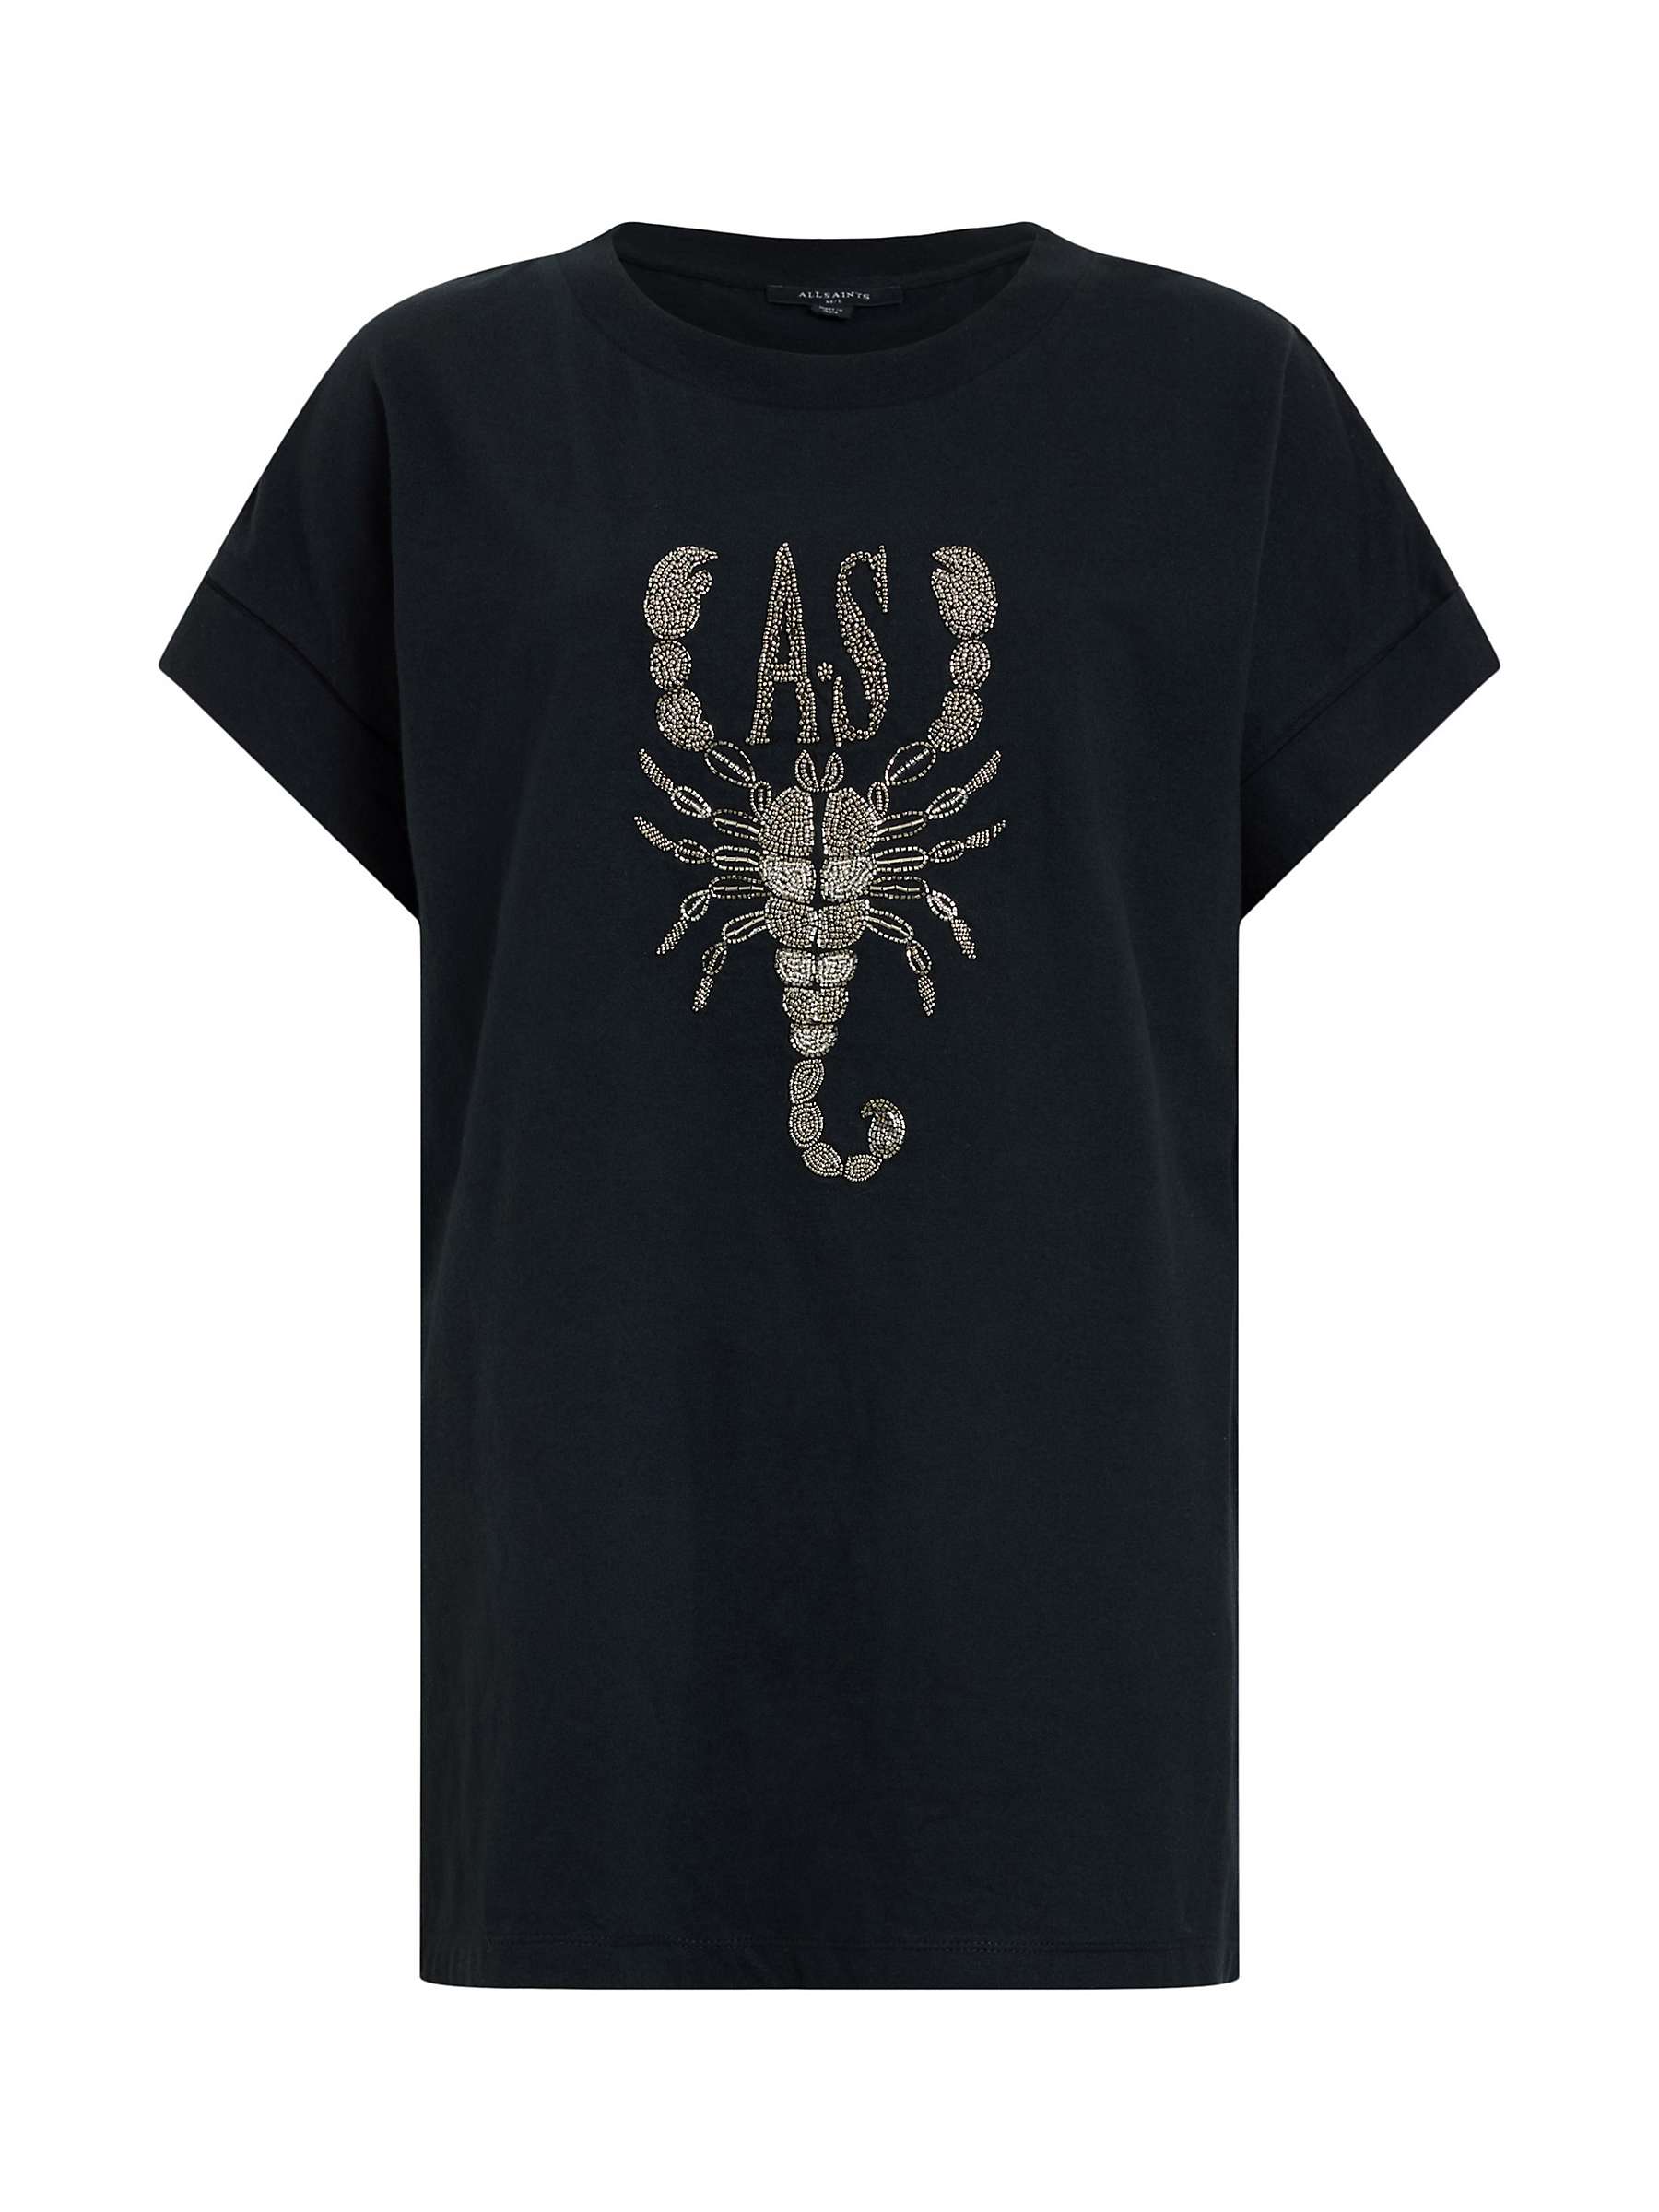 Buy AllSaints Scorpion Imogen Boy Organic Cotton T-Shirt, Black Online at johnlewis.com